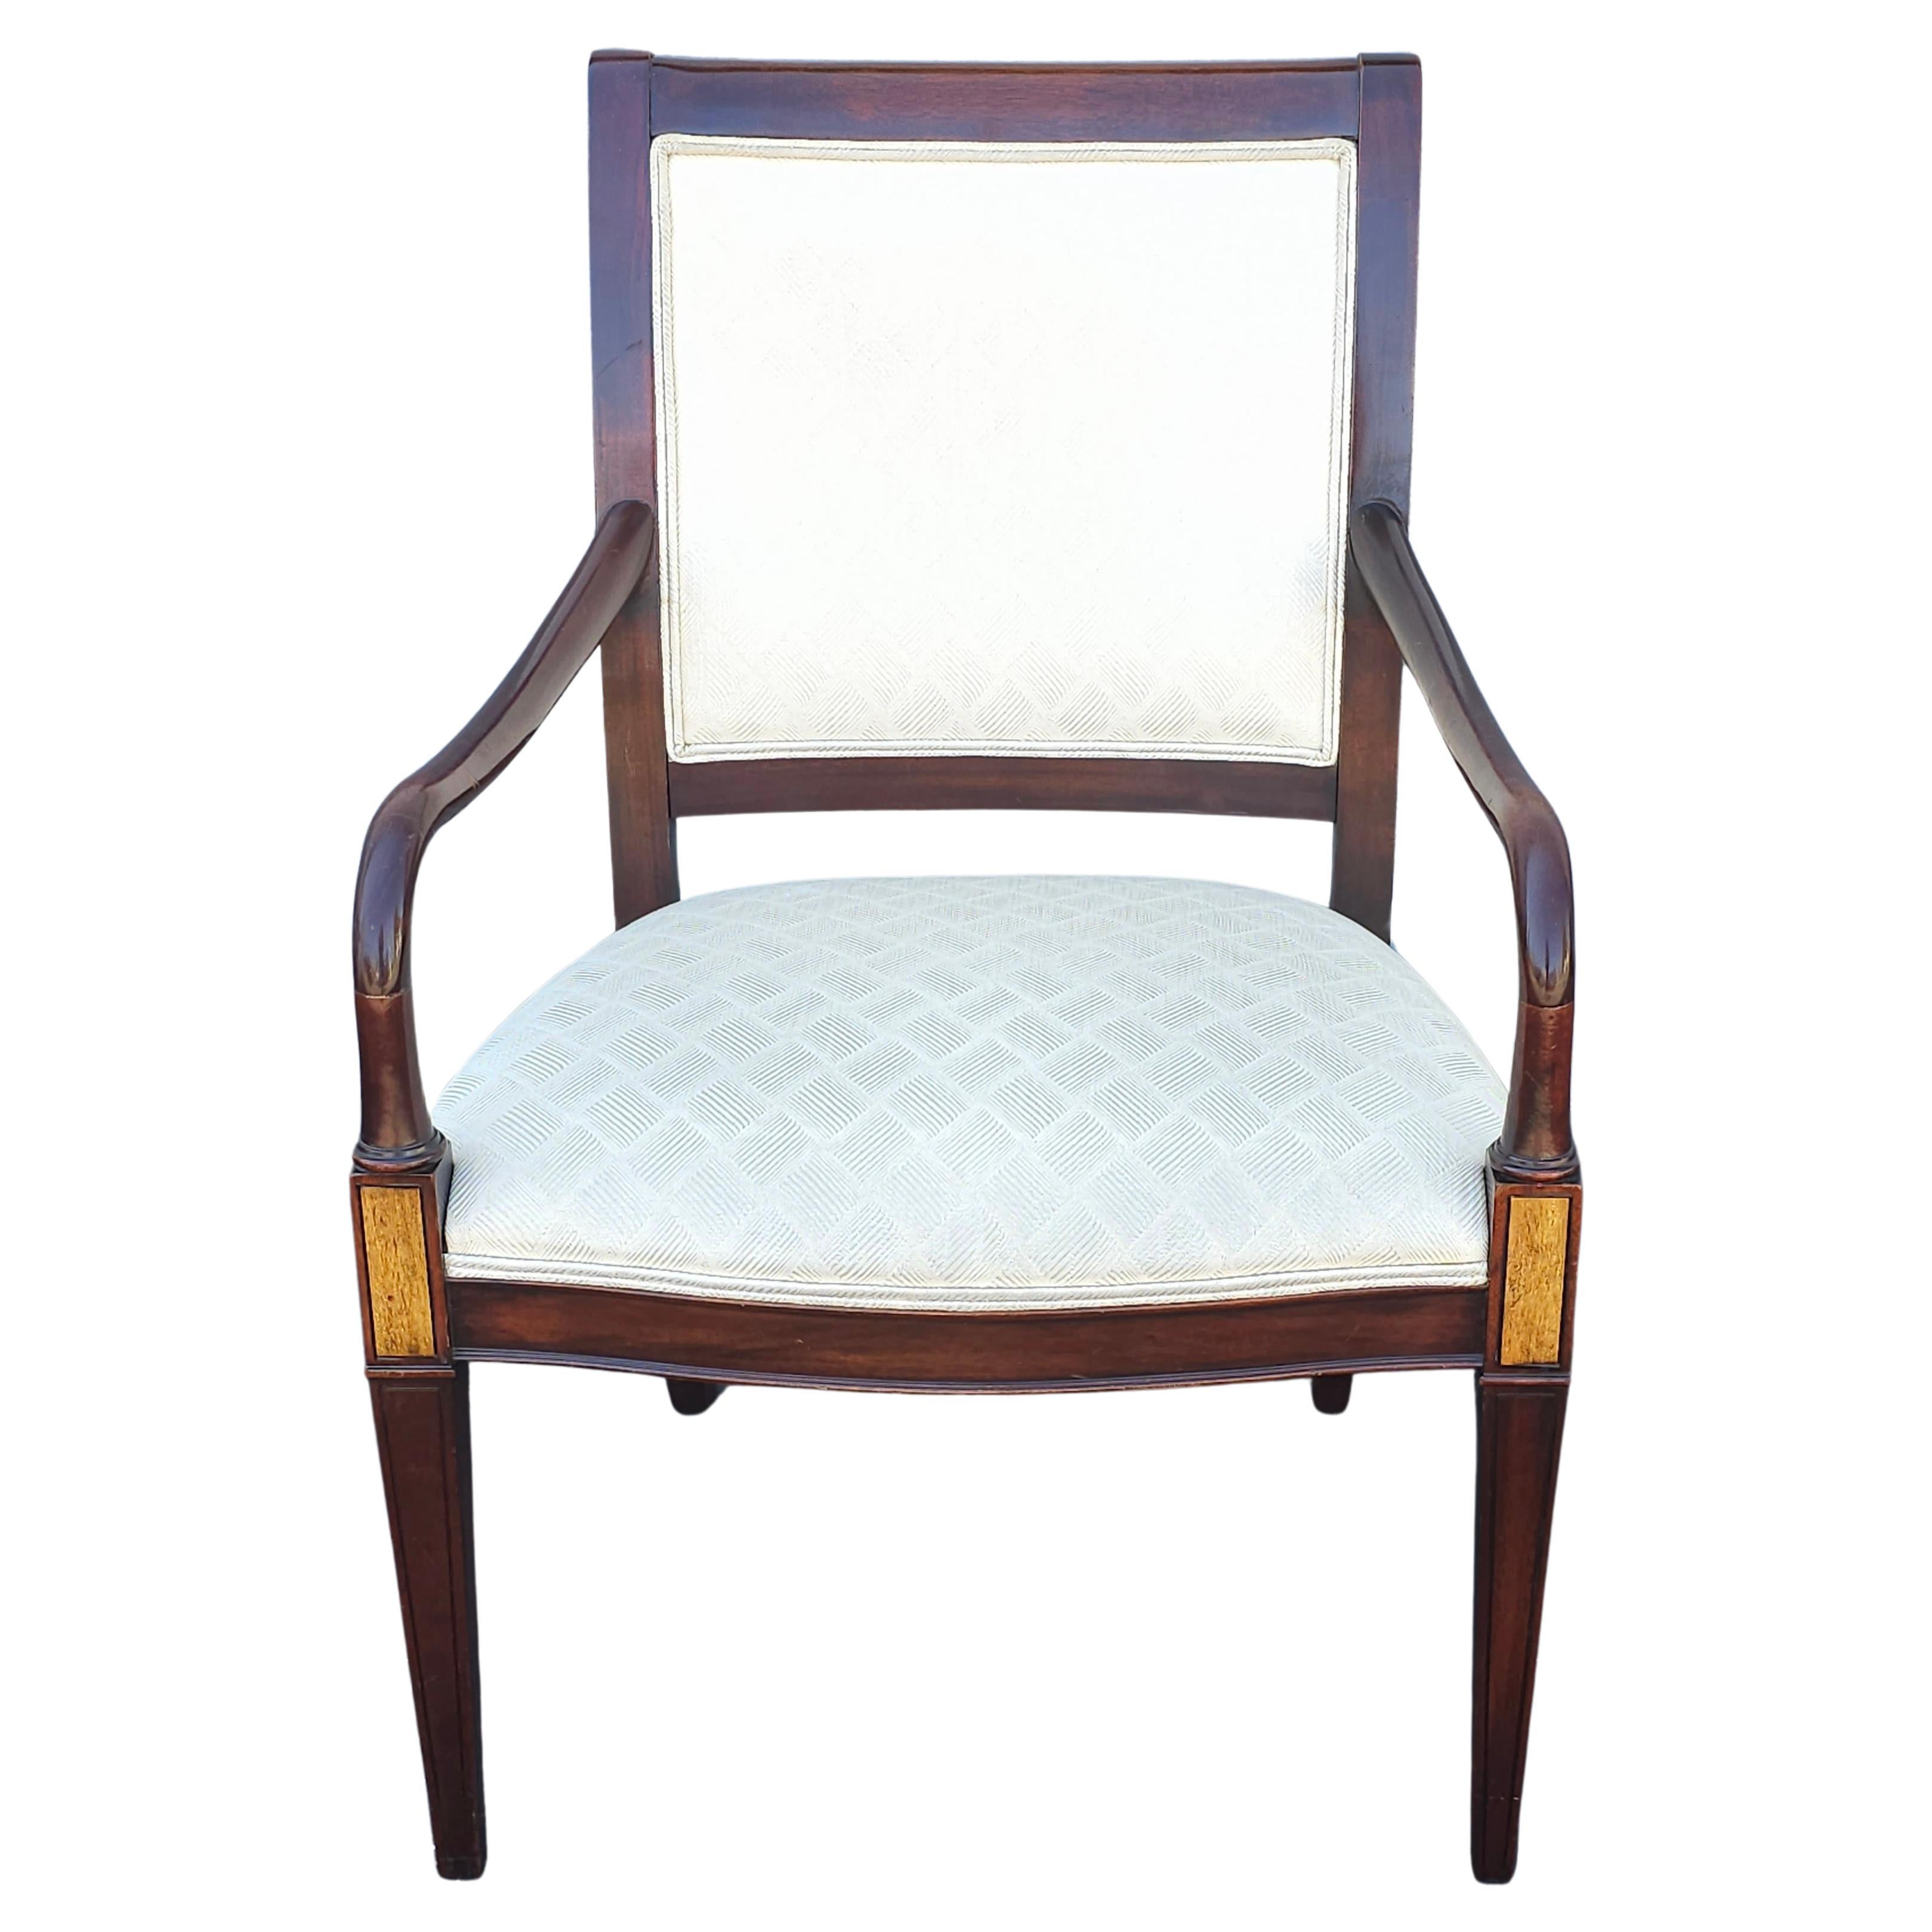 Hickory-Stuhl mit Mahagoni-Intarsien und gepolstertem Sessel im Federal-Stil des 20. Jahrhunderts